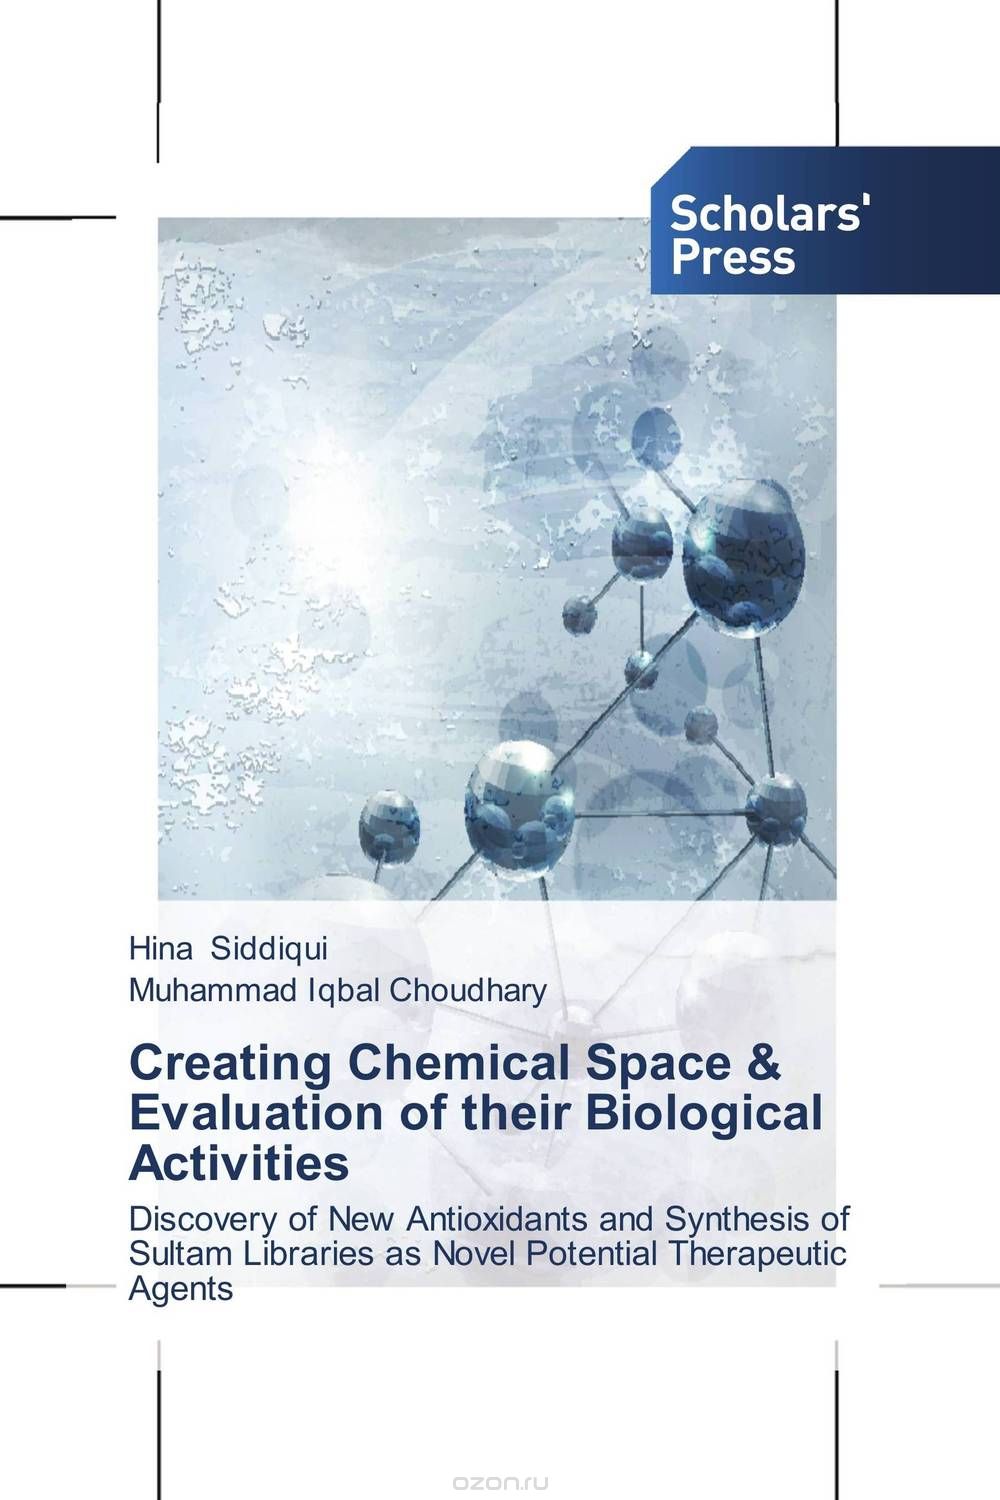 Скачать книгу "Creating Chemical Space & Evaluation of their Biological Activities"